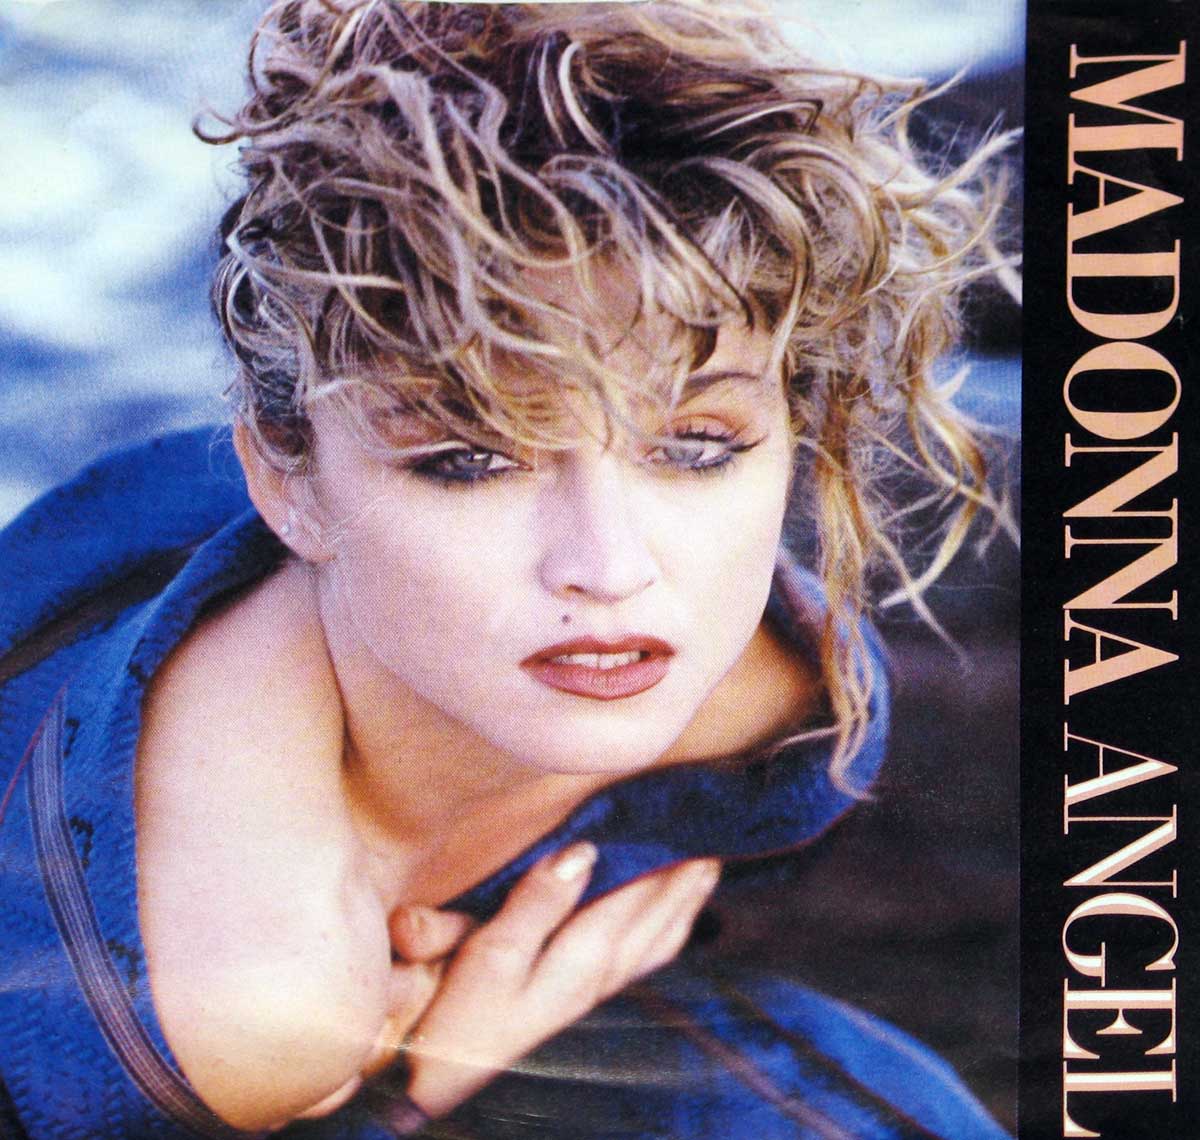 large album front cover photo of: ADONNA  ANGEL  1980s pop 7" Single on vinyl 